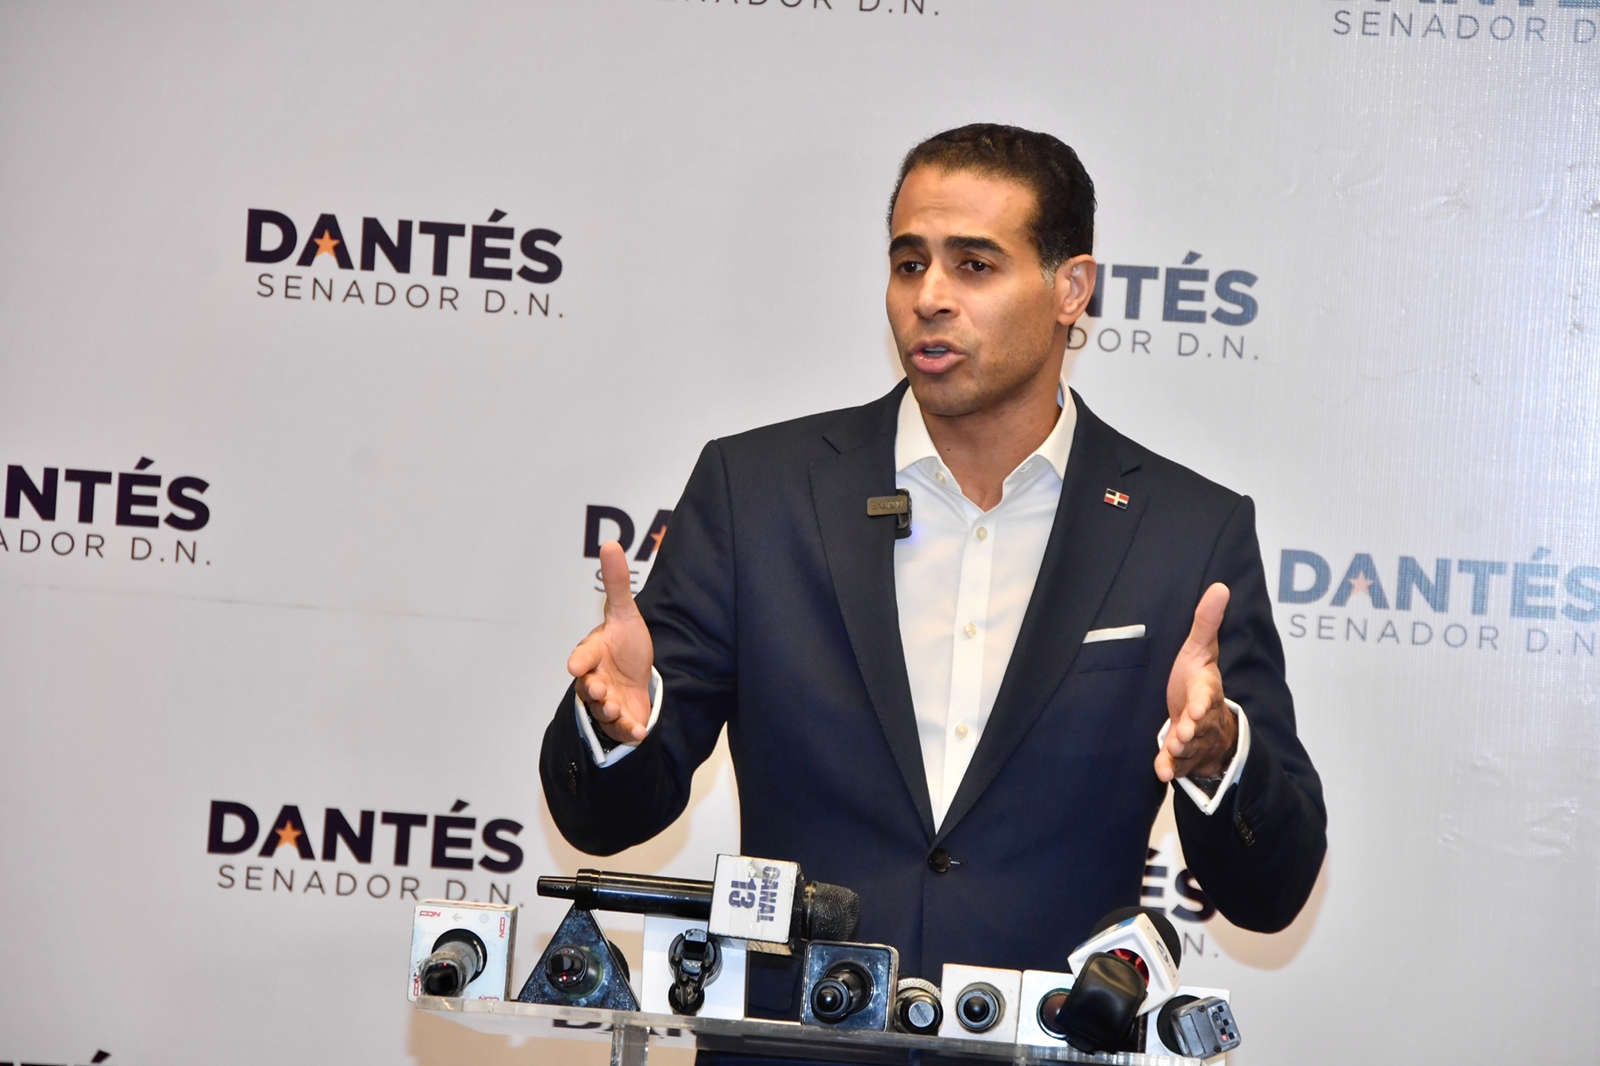 José Dantés formally announces his aspirations for the Senate of the DN